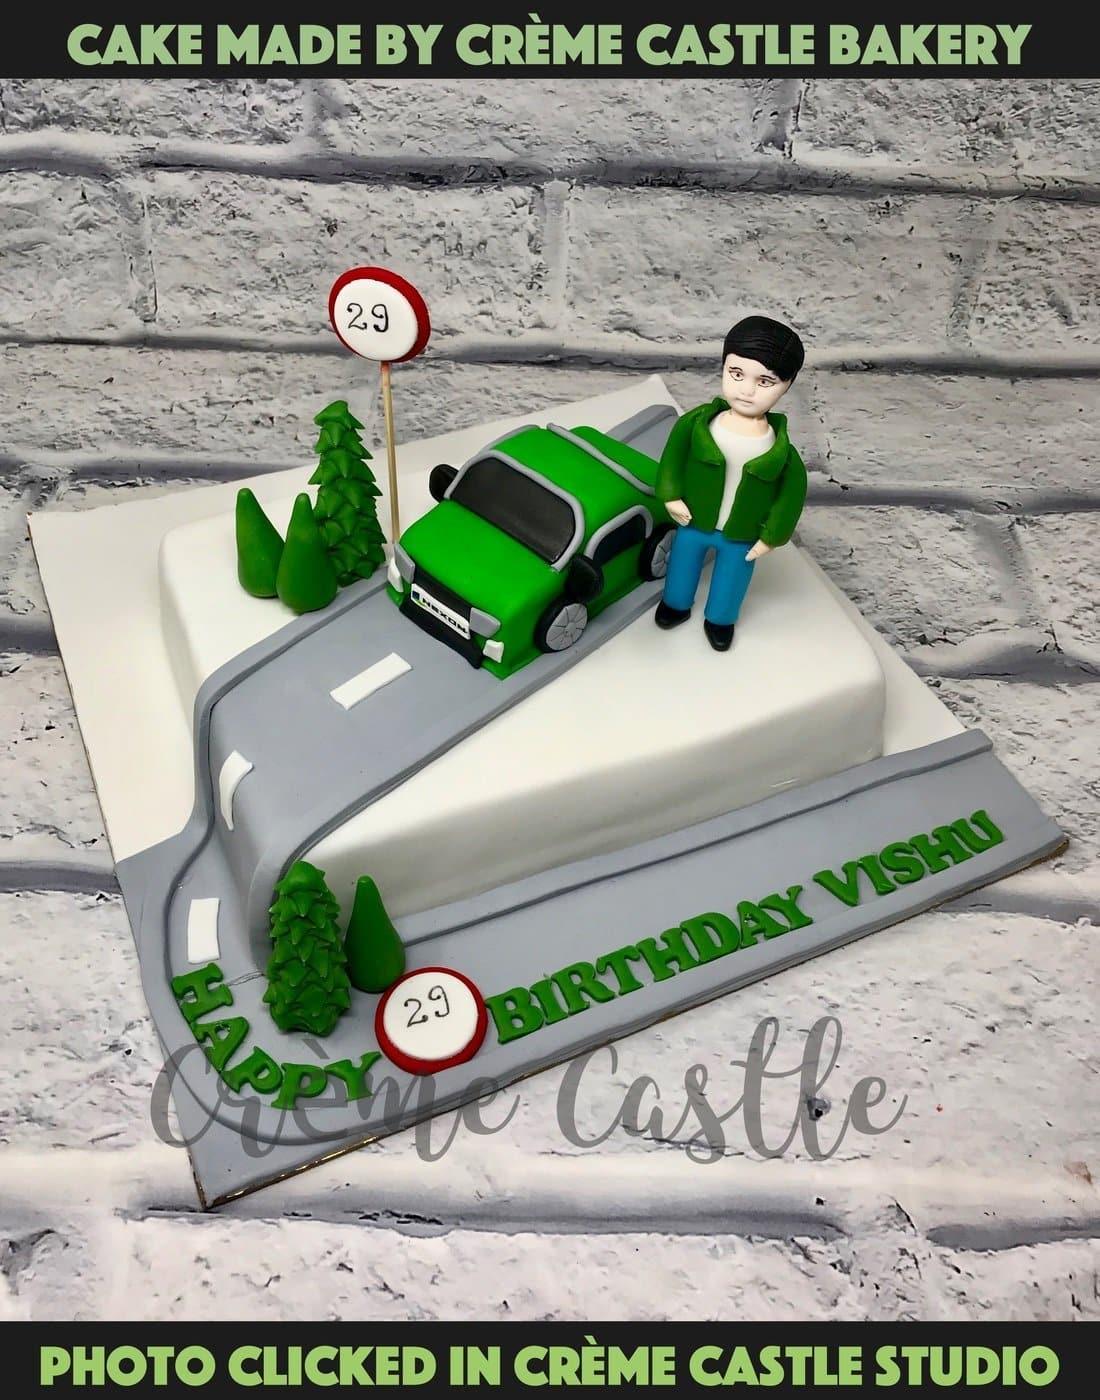 New Car Owner Cake - Creme Castle